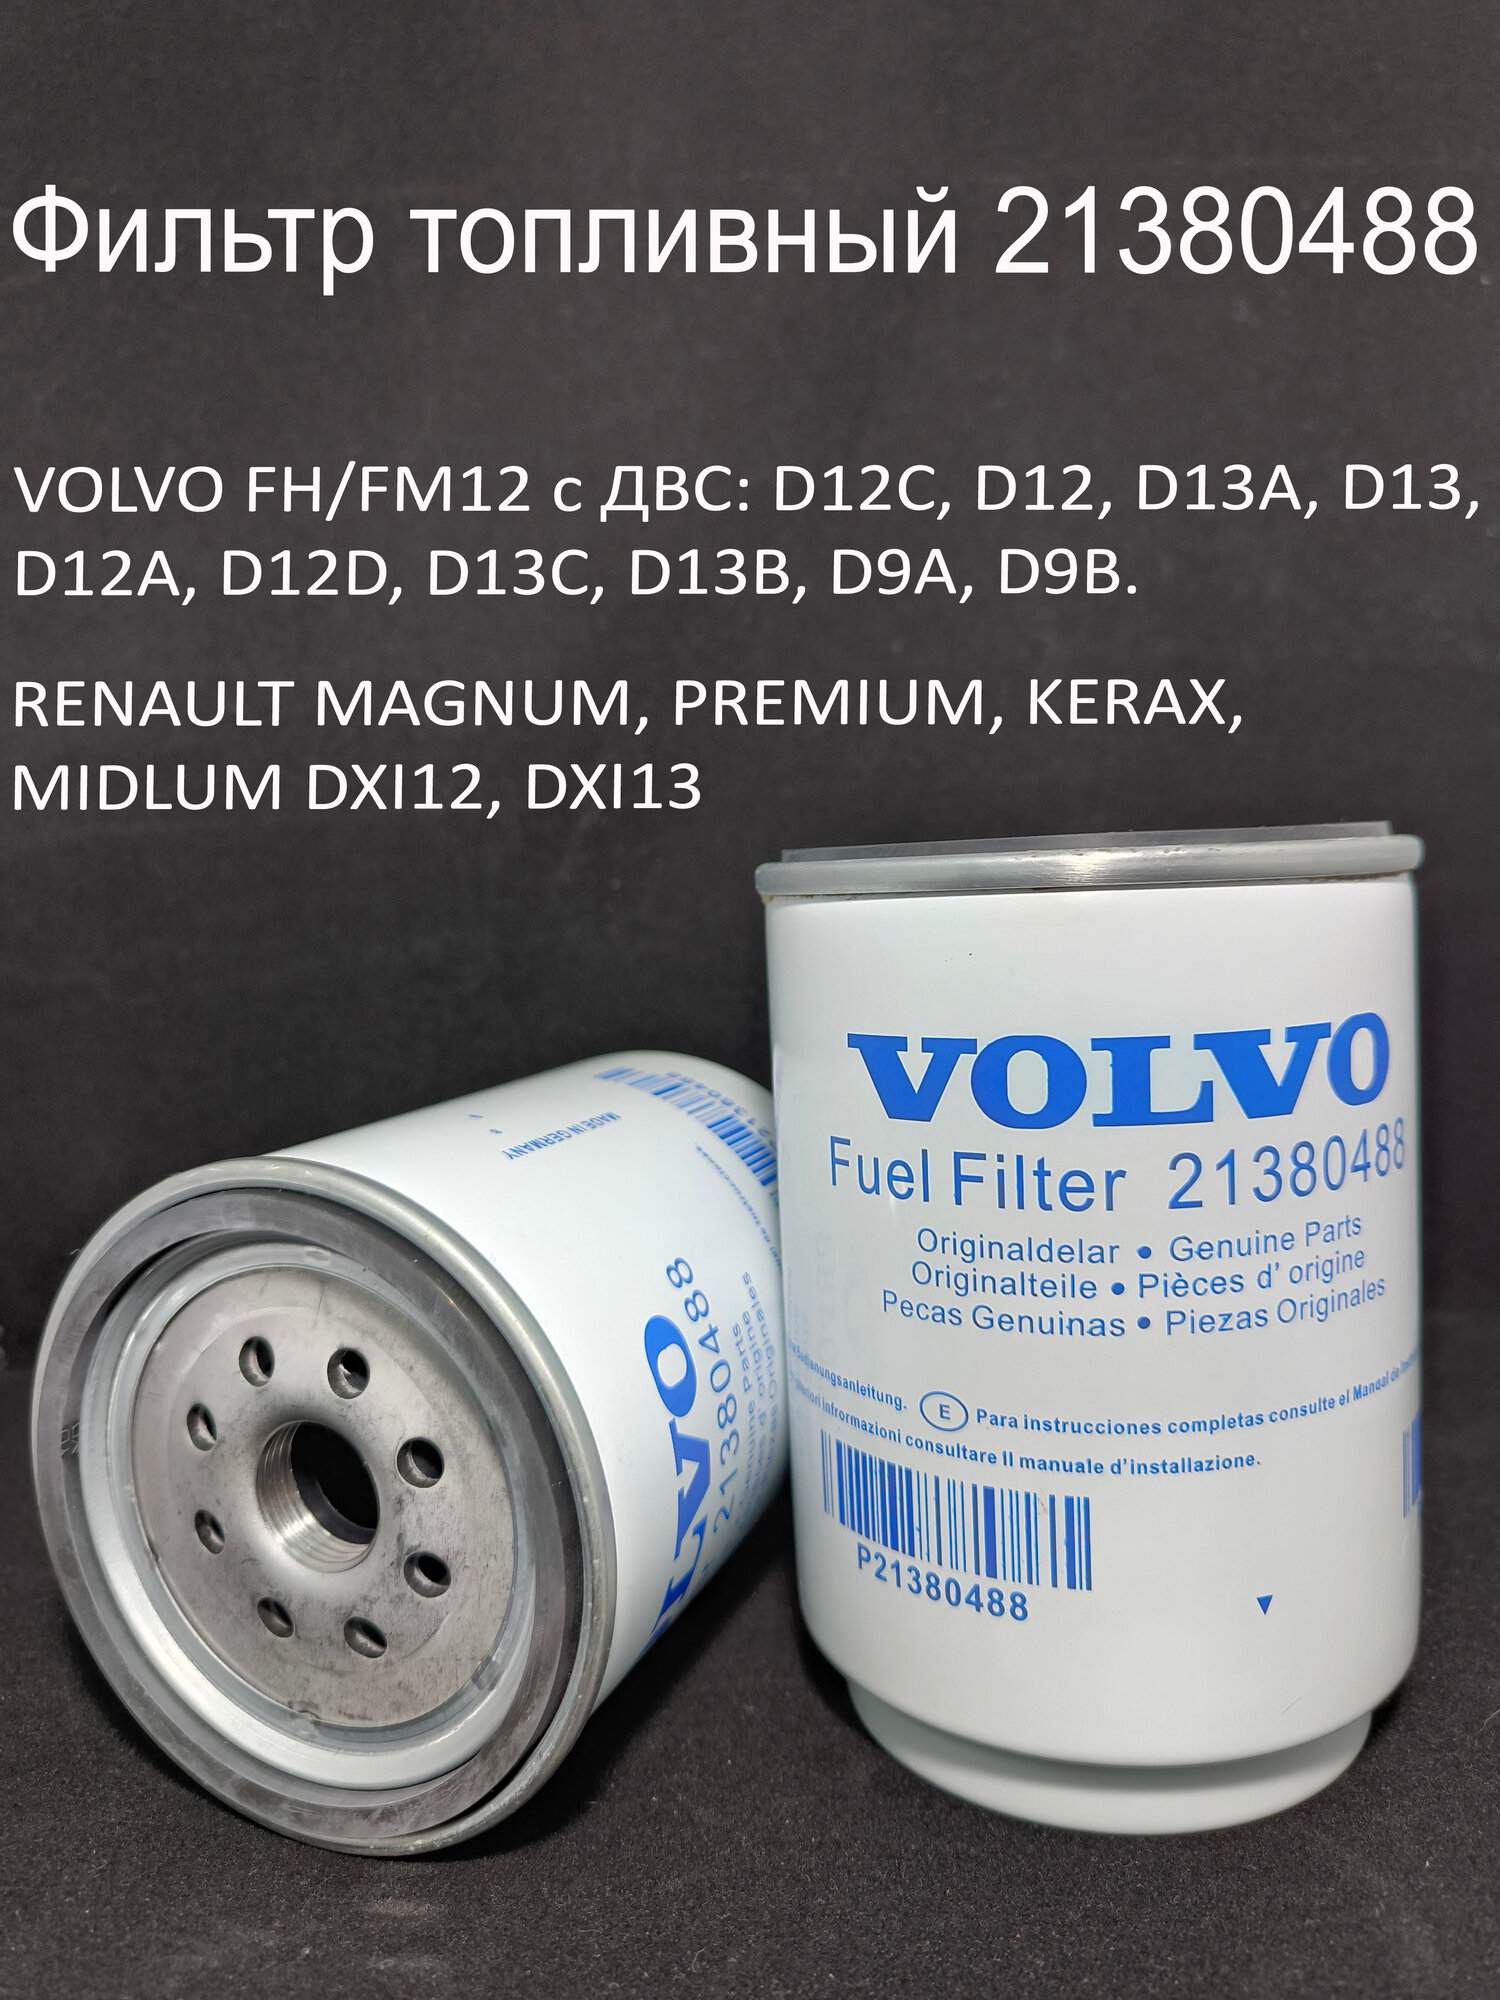 Фильтр топливный Сепаратора Volvo / Rvi VOLVO артикул 21380488